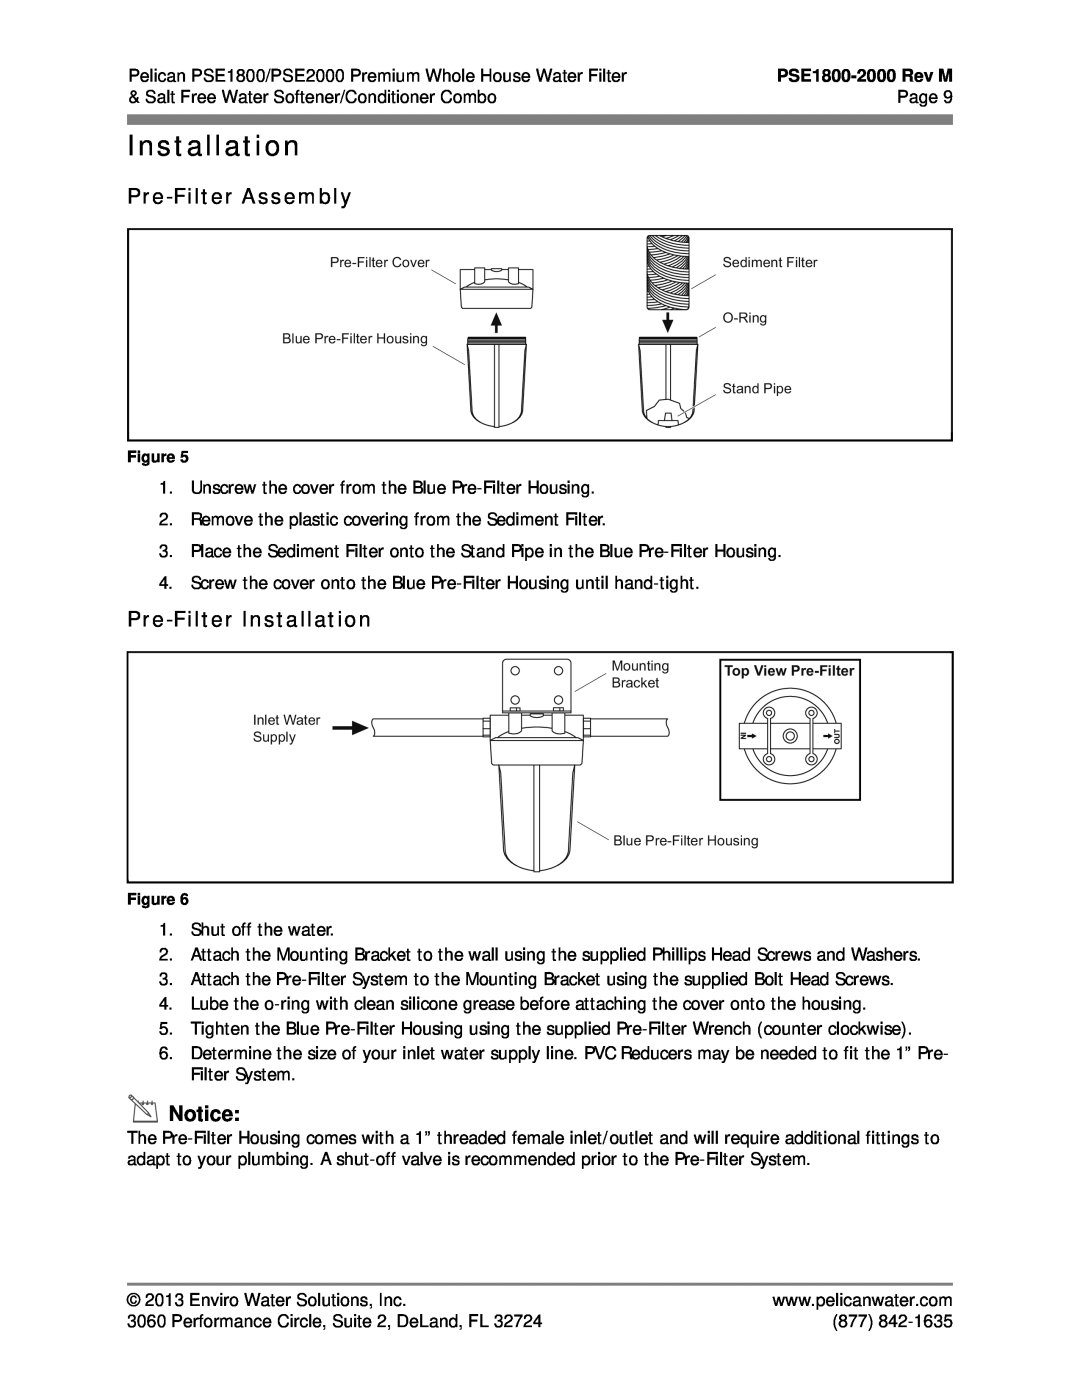 Pelican PSE2000 owner manual Pre-FilterAssembly, Pre-FilterInstallation, PSE1800-2000Rev M 